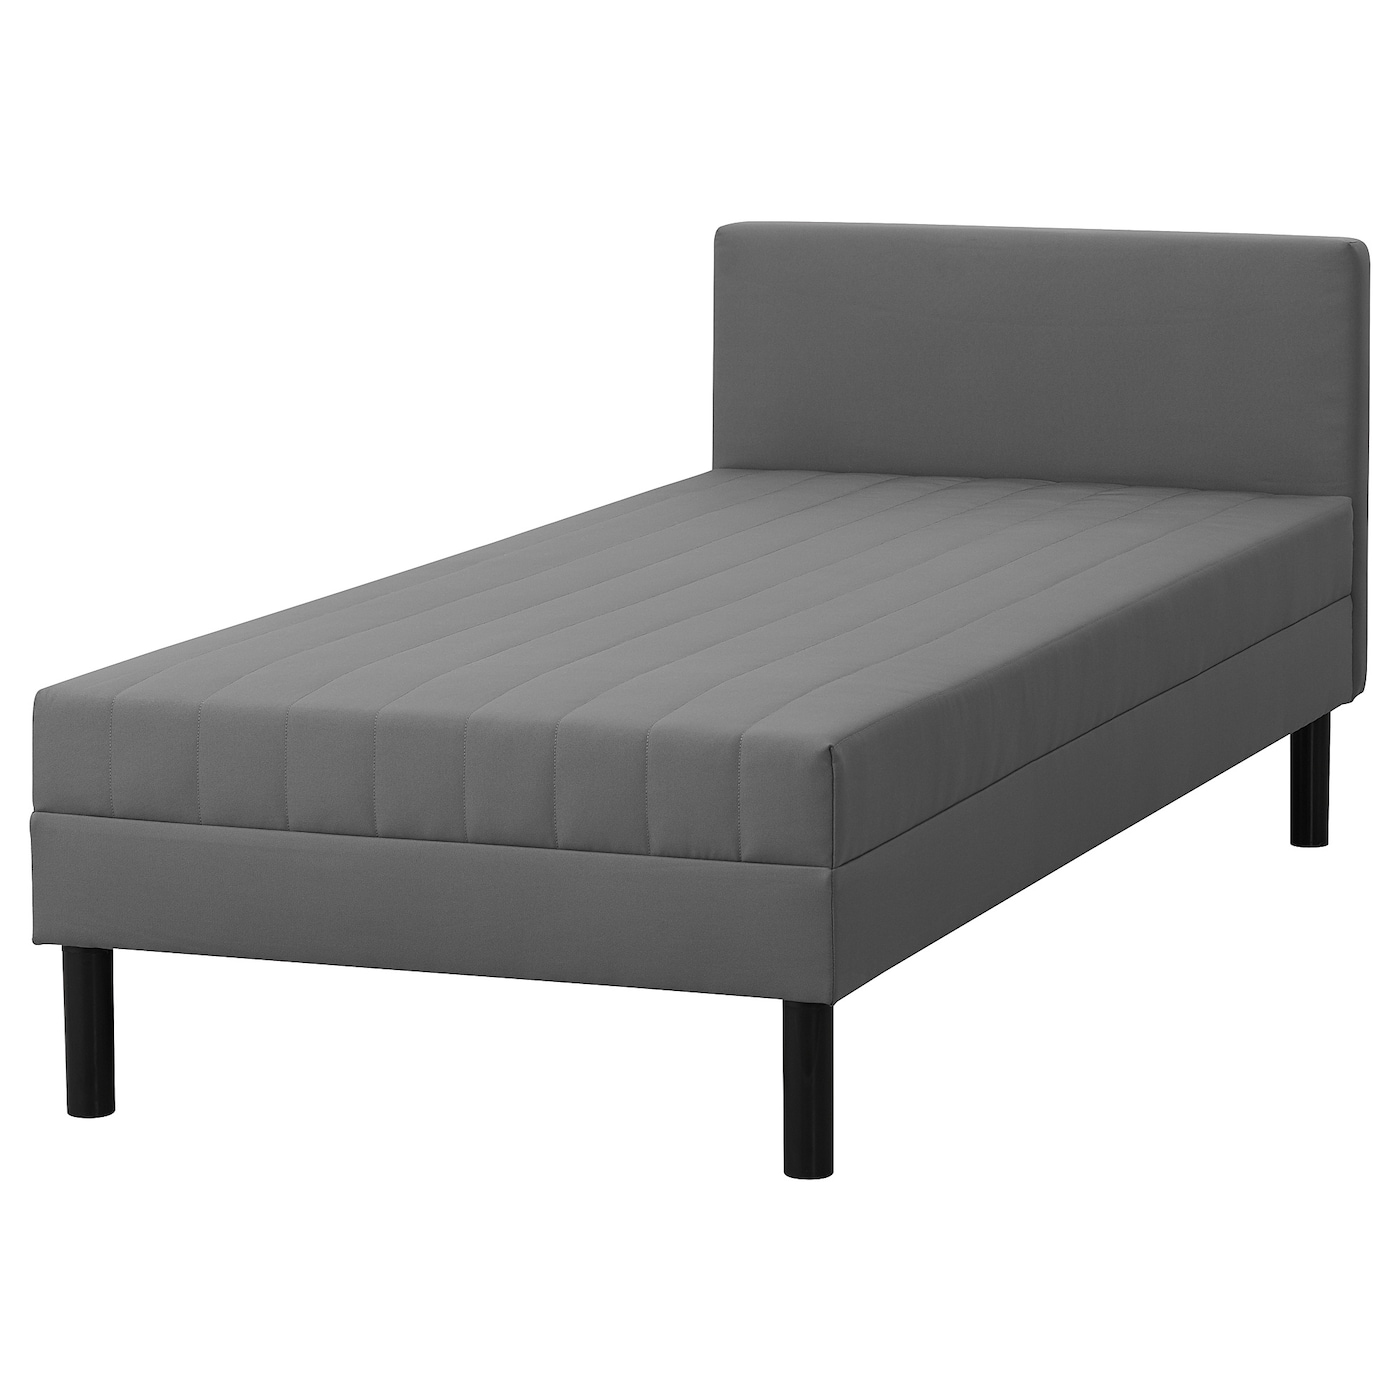 Каркас кровати с мягкой обивкой и матрасом - IKEA SVELGEN, 200х90 см, матрас жесткий, серый, СВЕЛГЕН ИКЕА